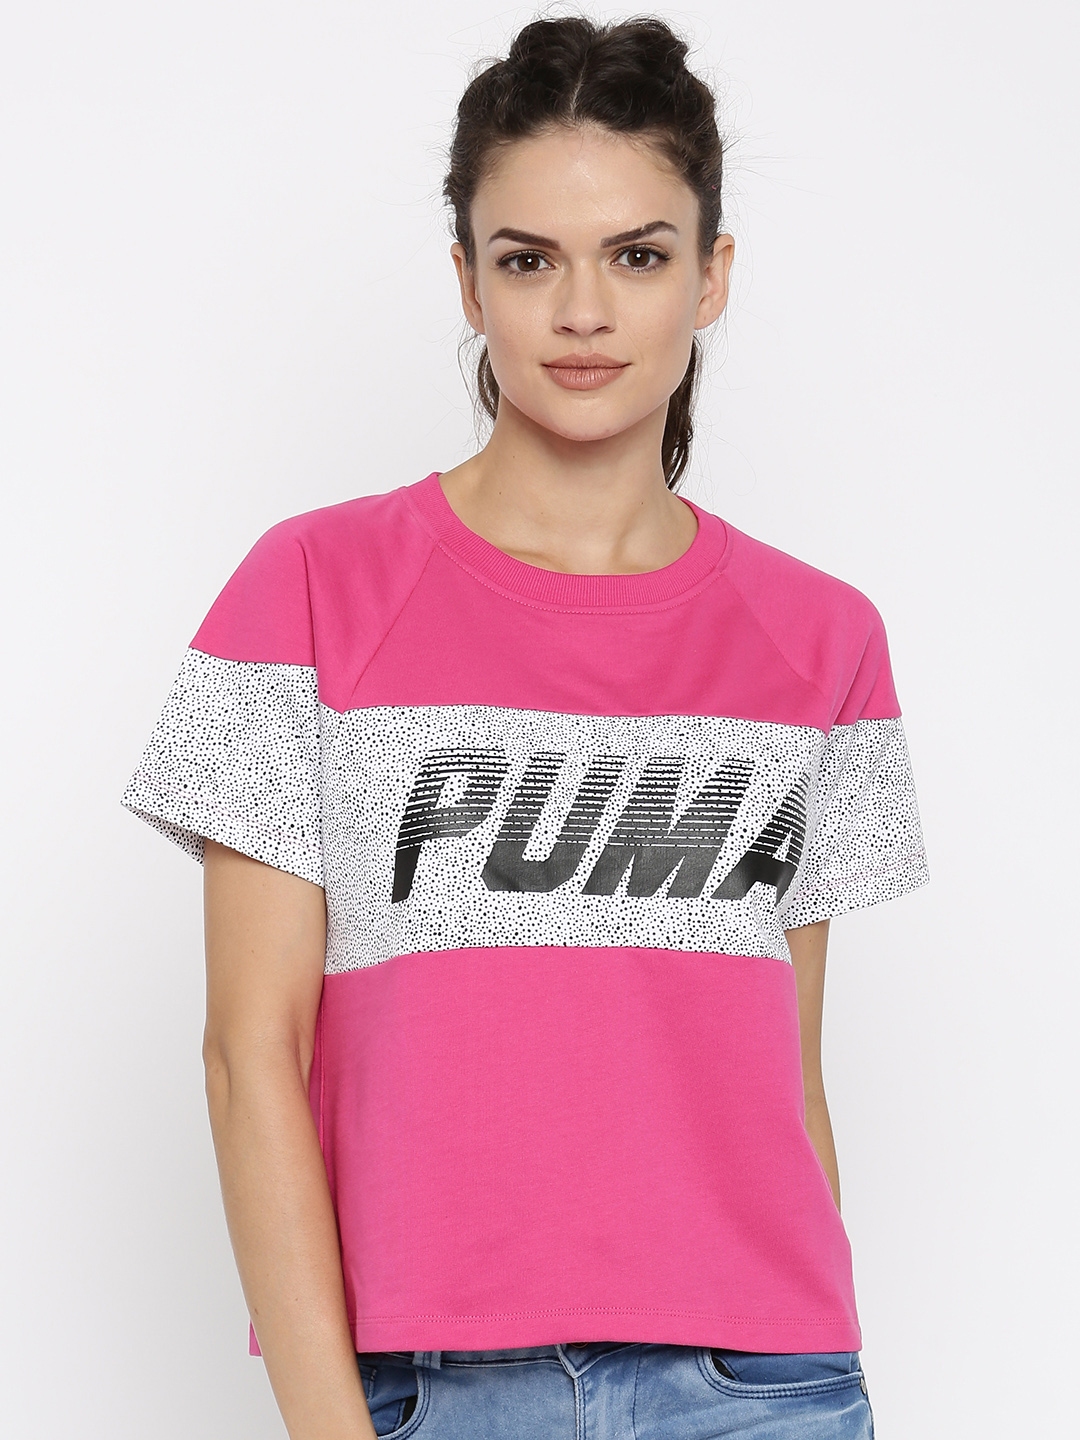 Buy Puma Women Pink White Printed T Shirt Tshirts For Women Myntra